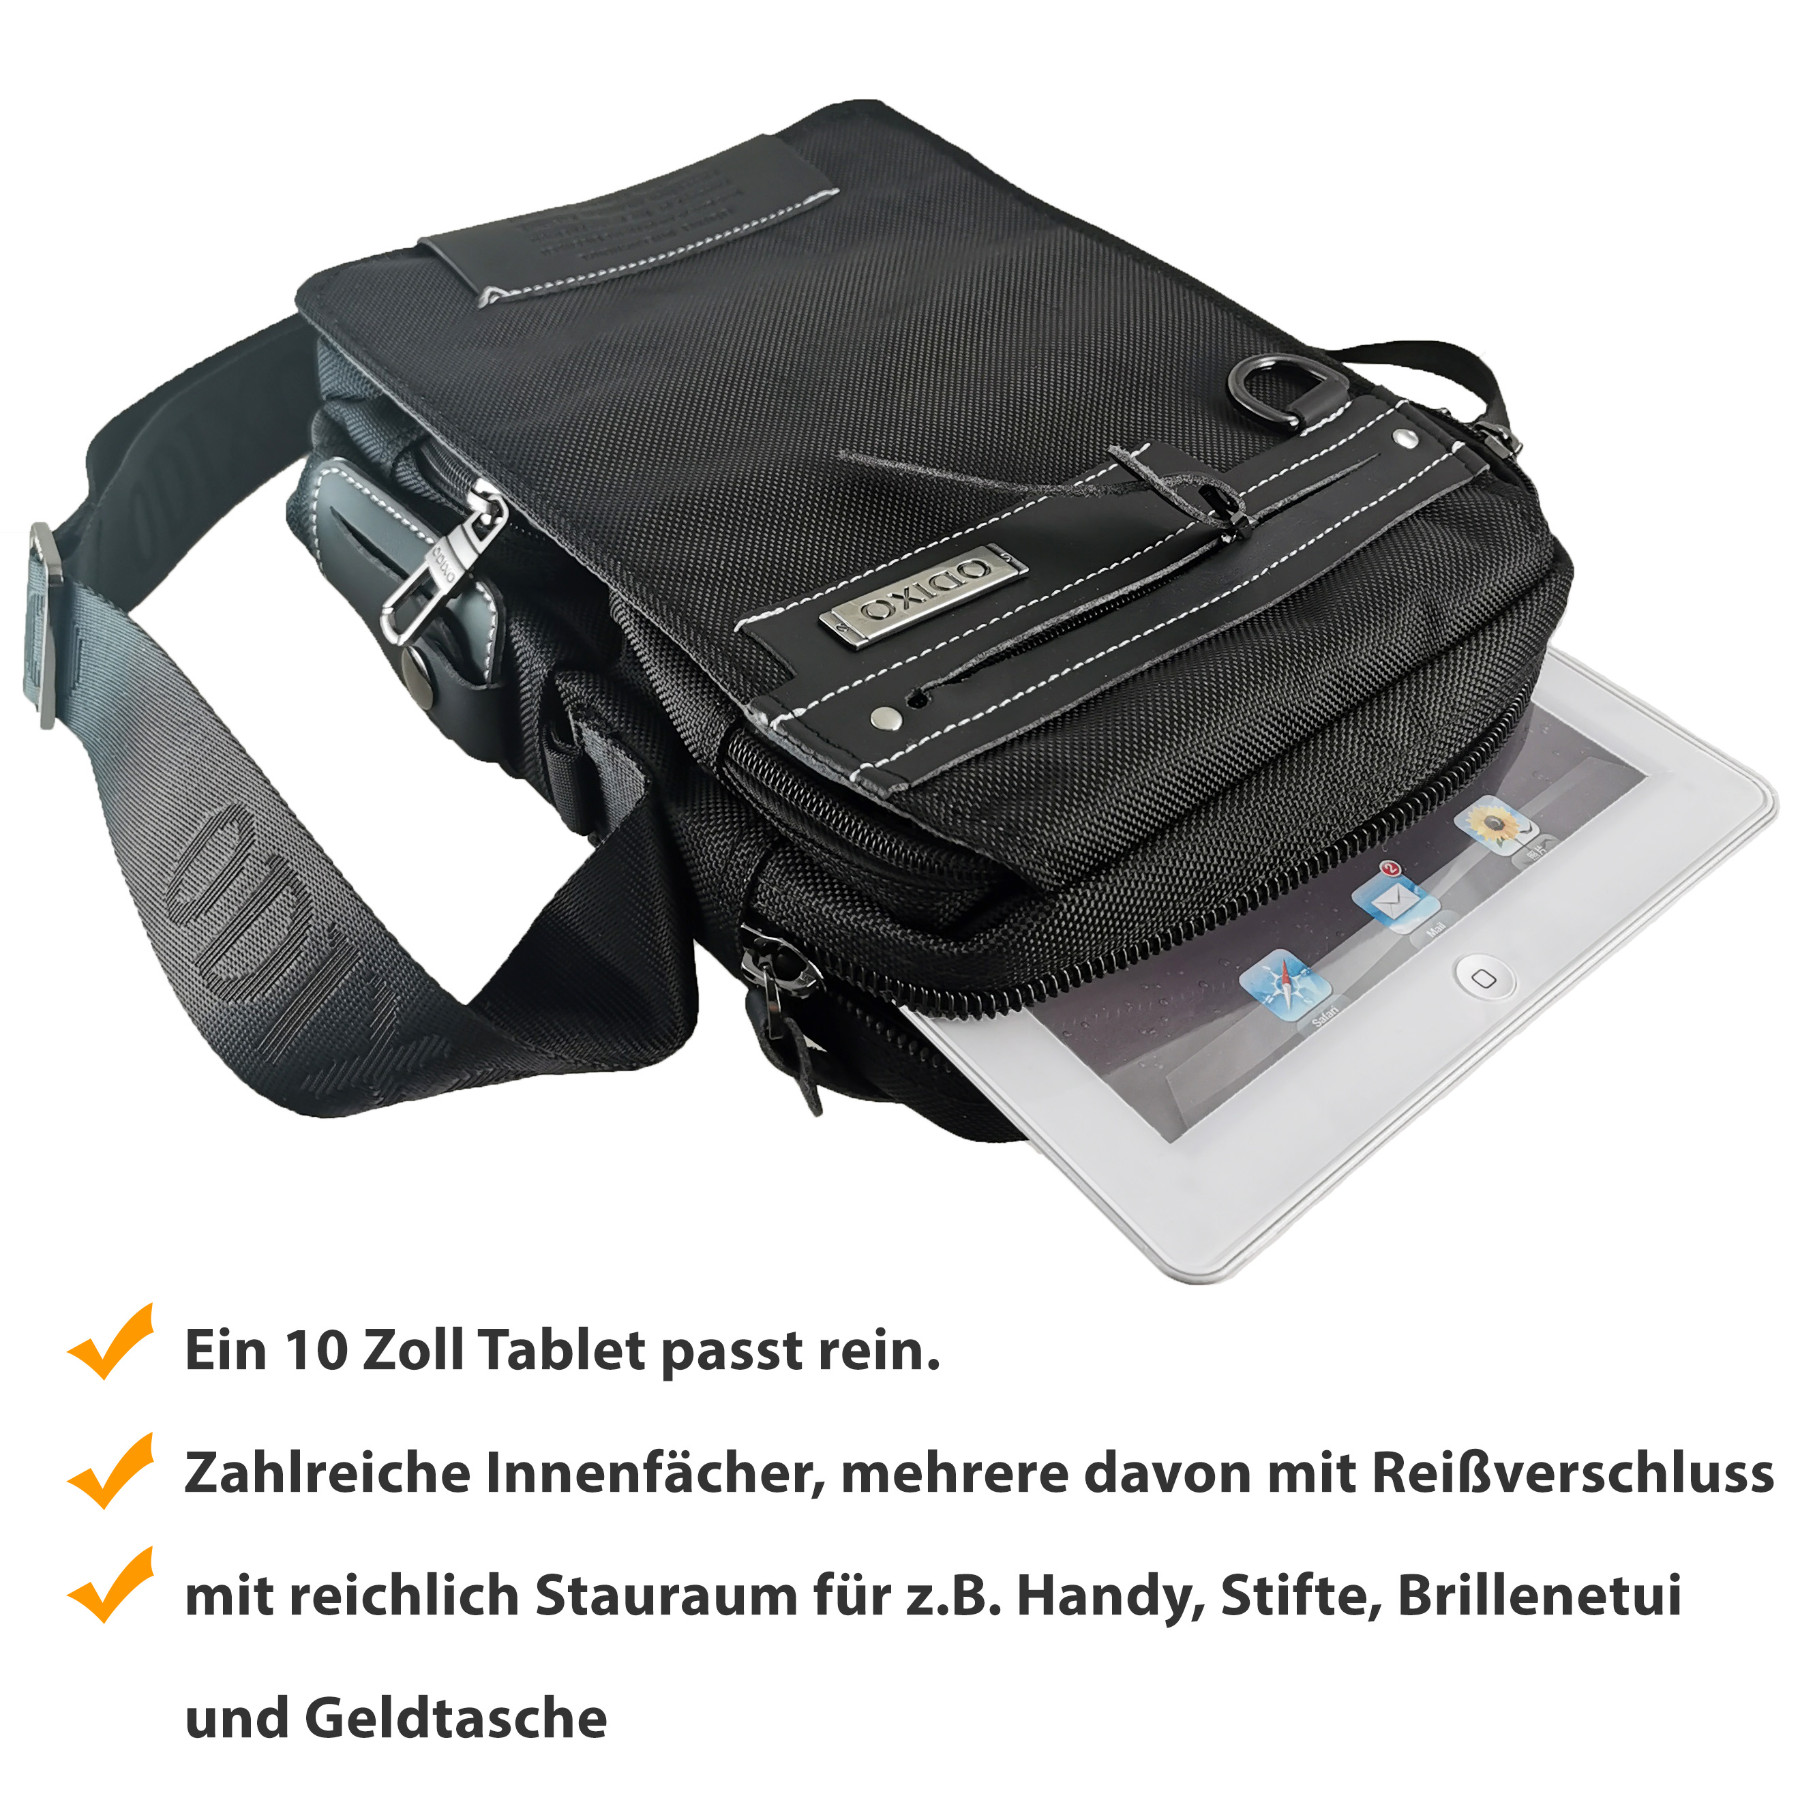 ODIXO Premium Umhängetasche Messenger Bag Schwarz B2565-1 Professional Edition